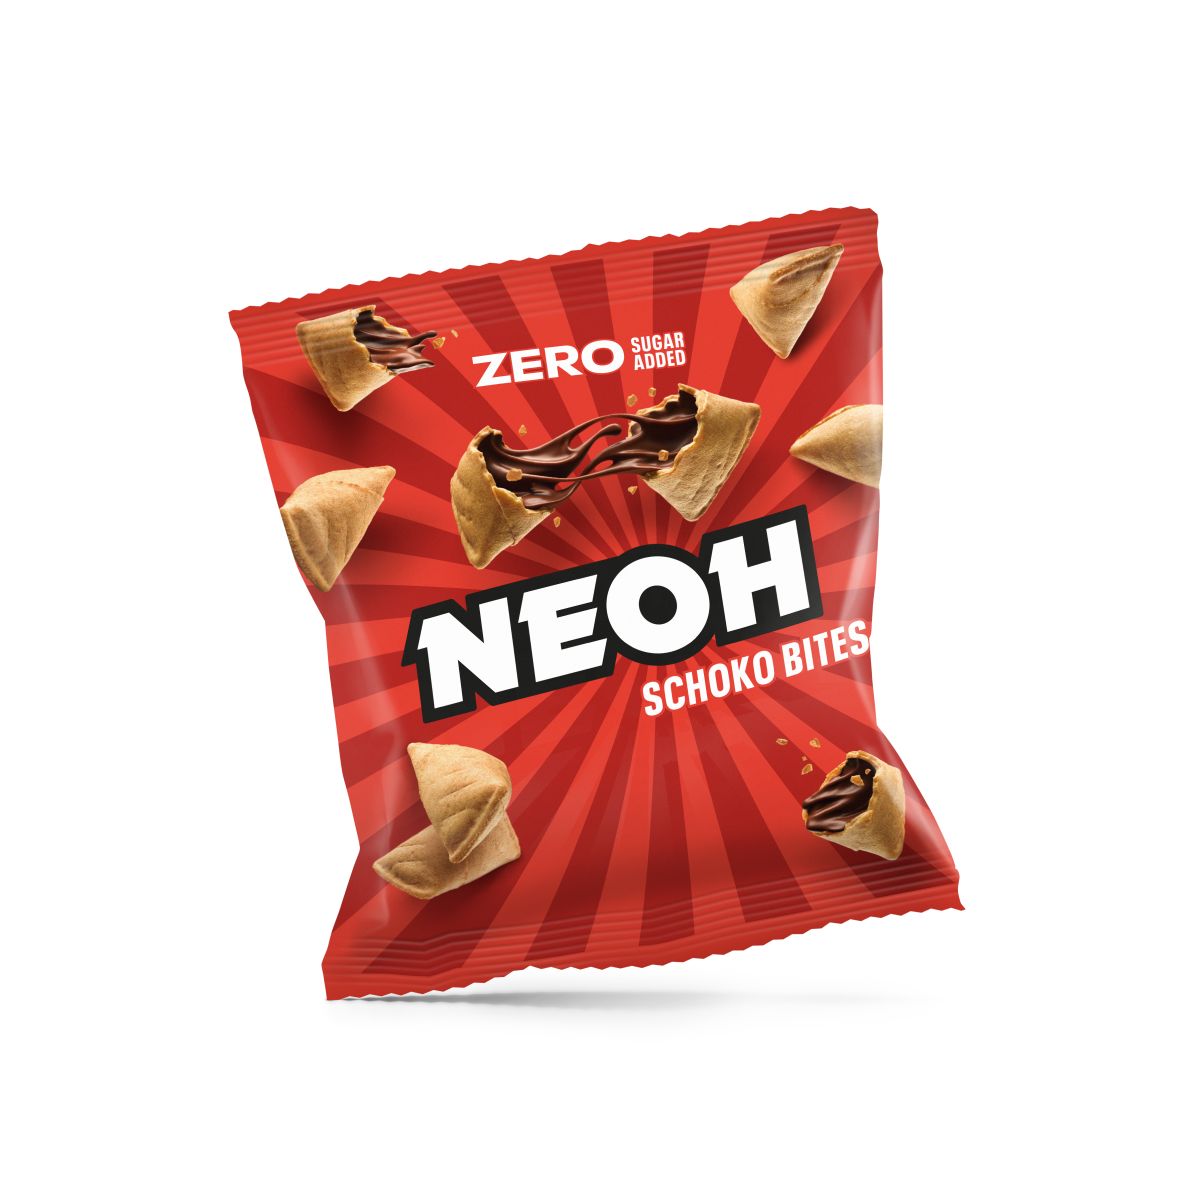 NEOH Schoko Bites